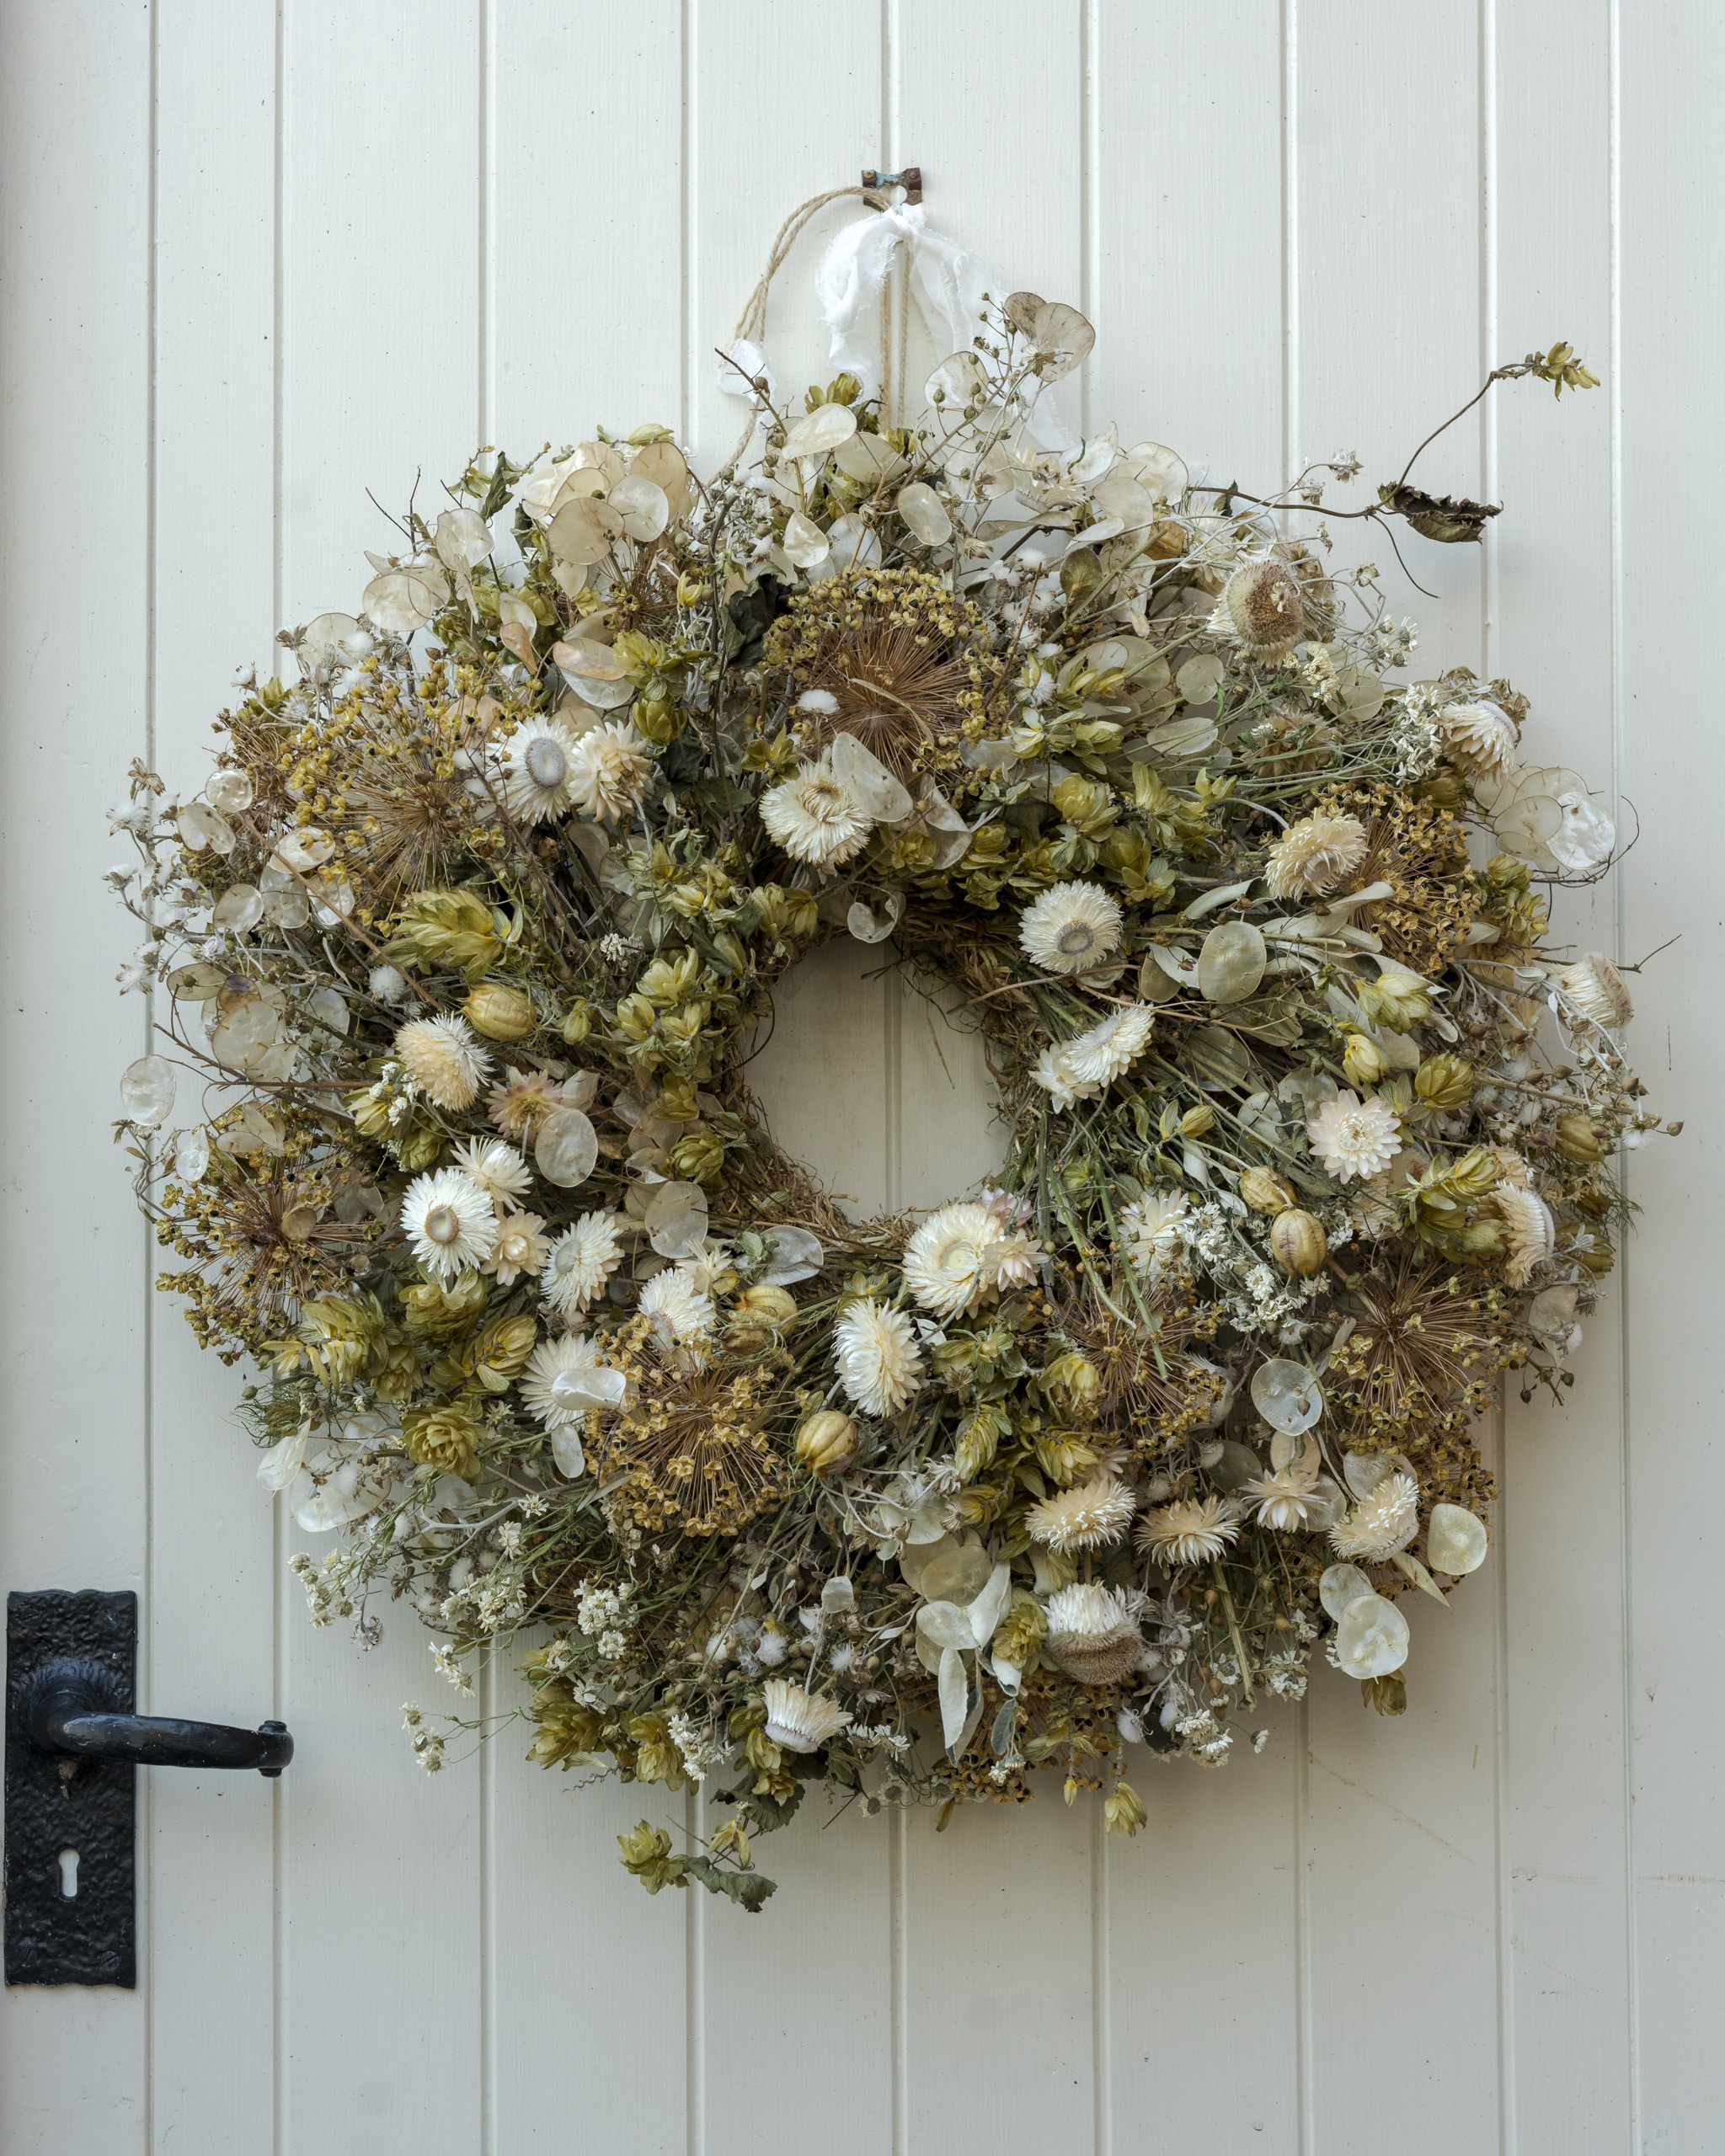 Featured image for “Wild Garden Style Everlasting Dried Flower Wreath”